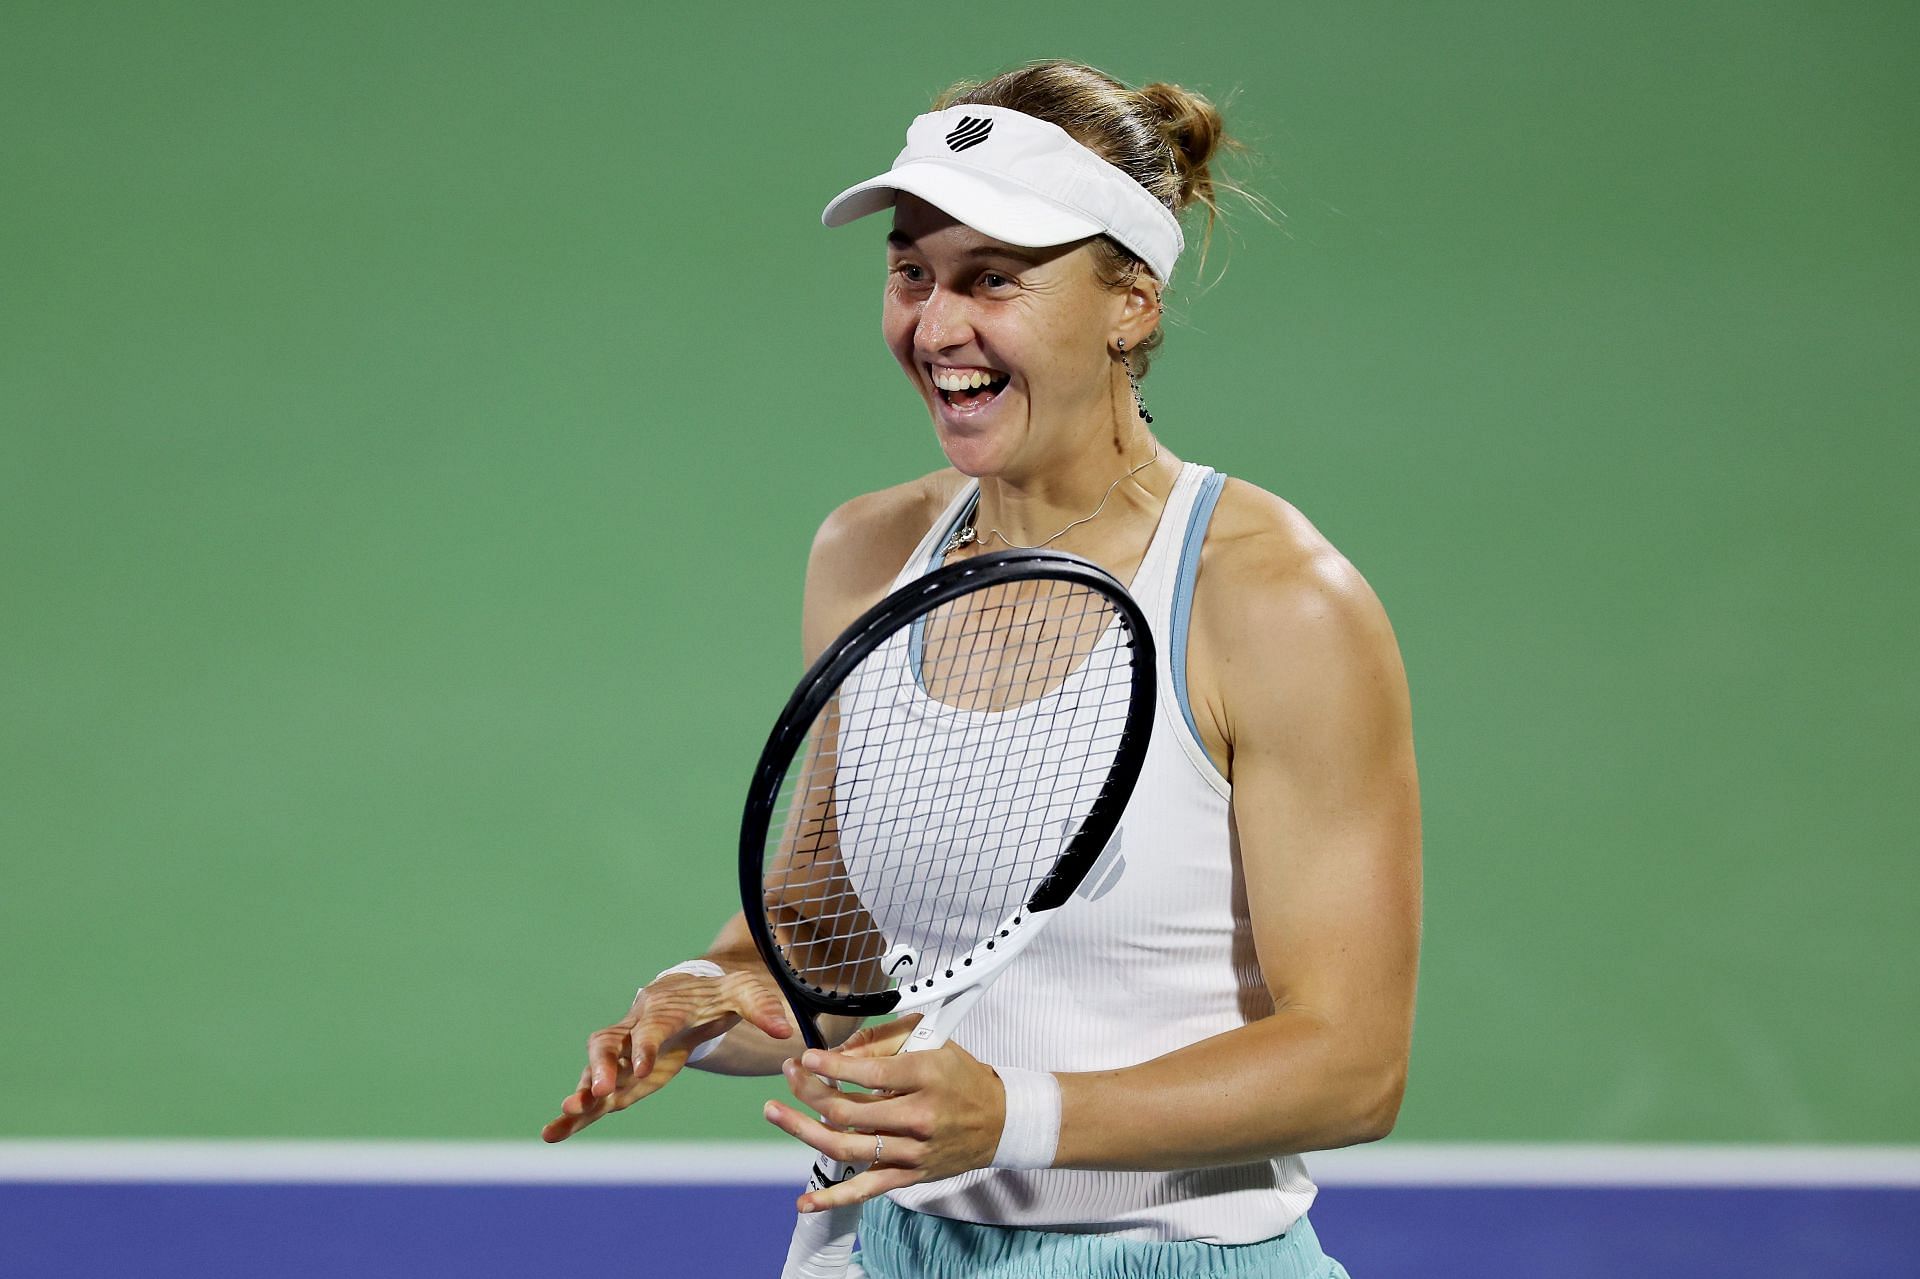 Samsonova made the semifinals in Washinton last week.